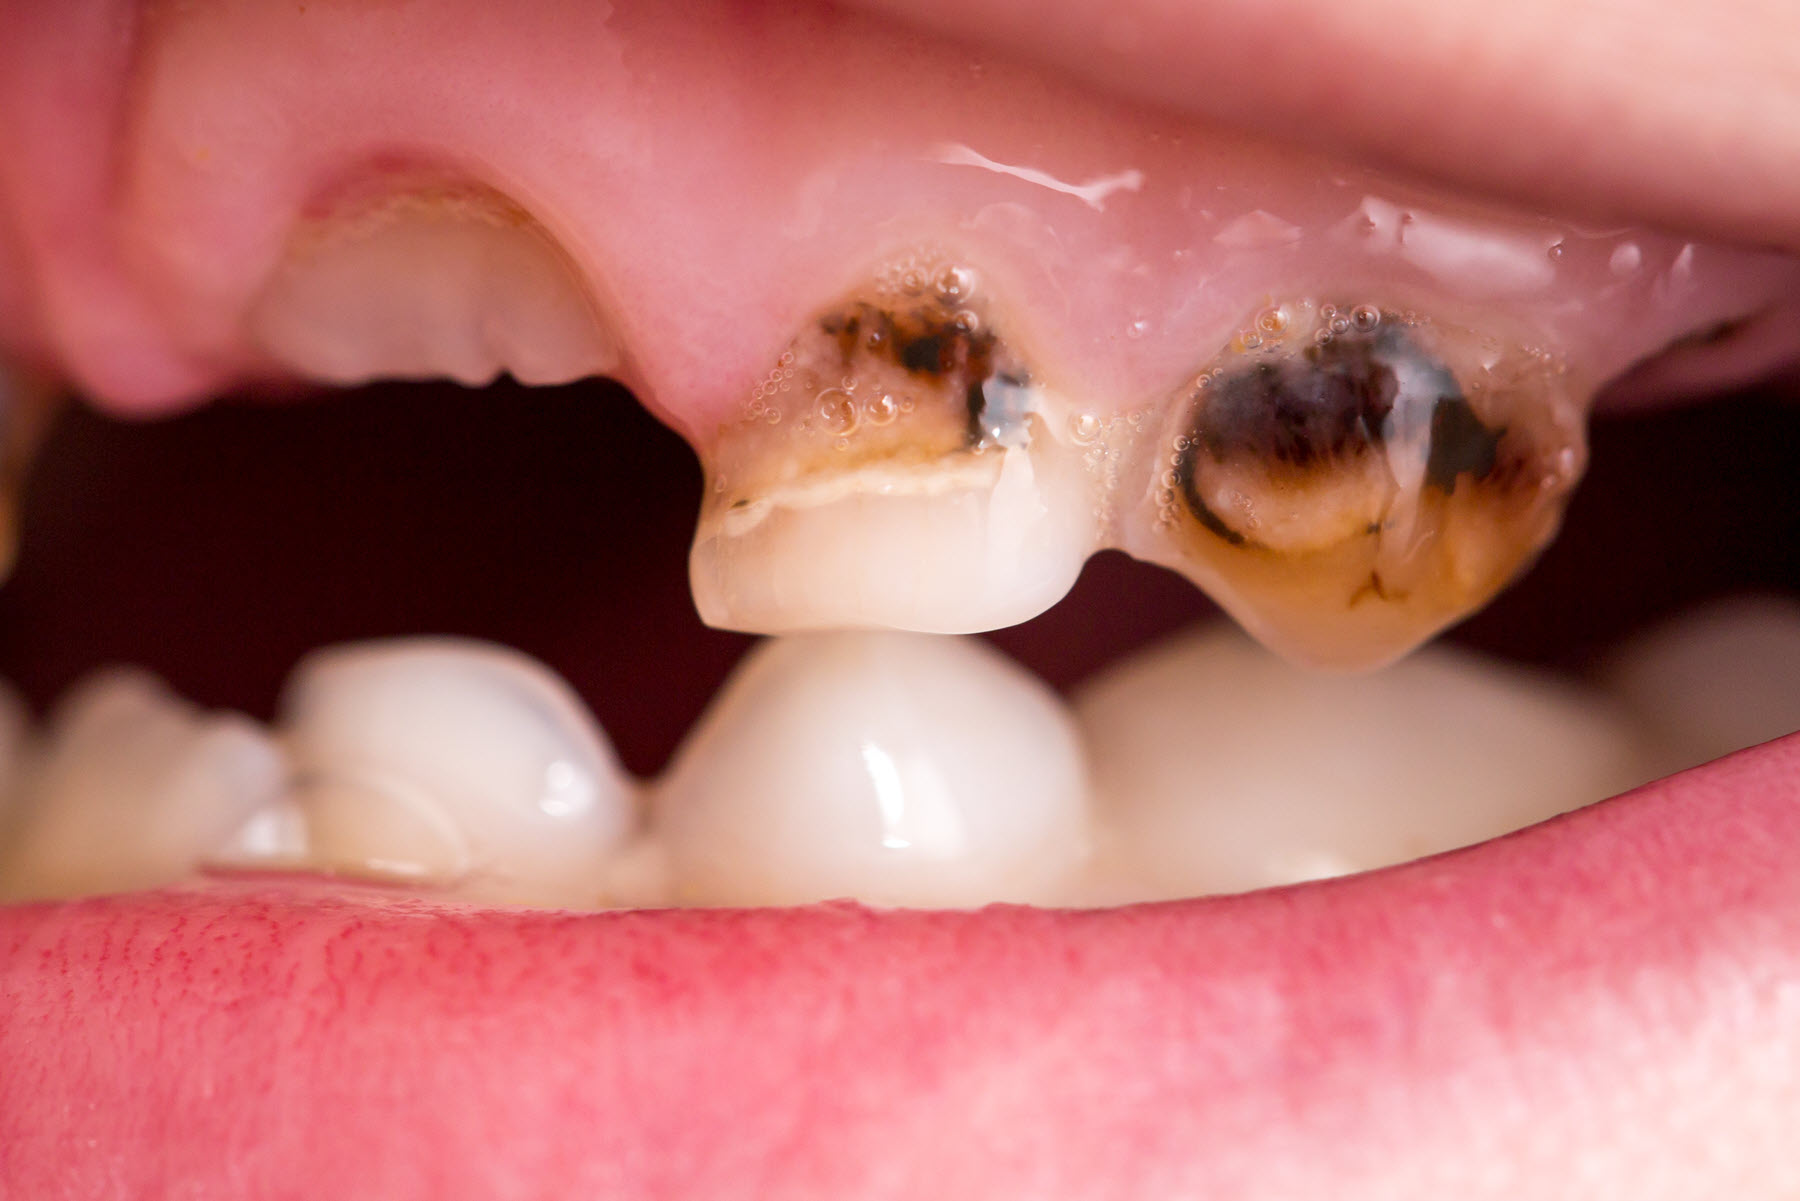 treatment of cavities on baby teeth in Brisbane